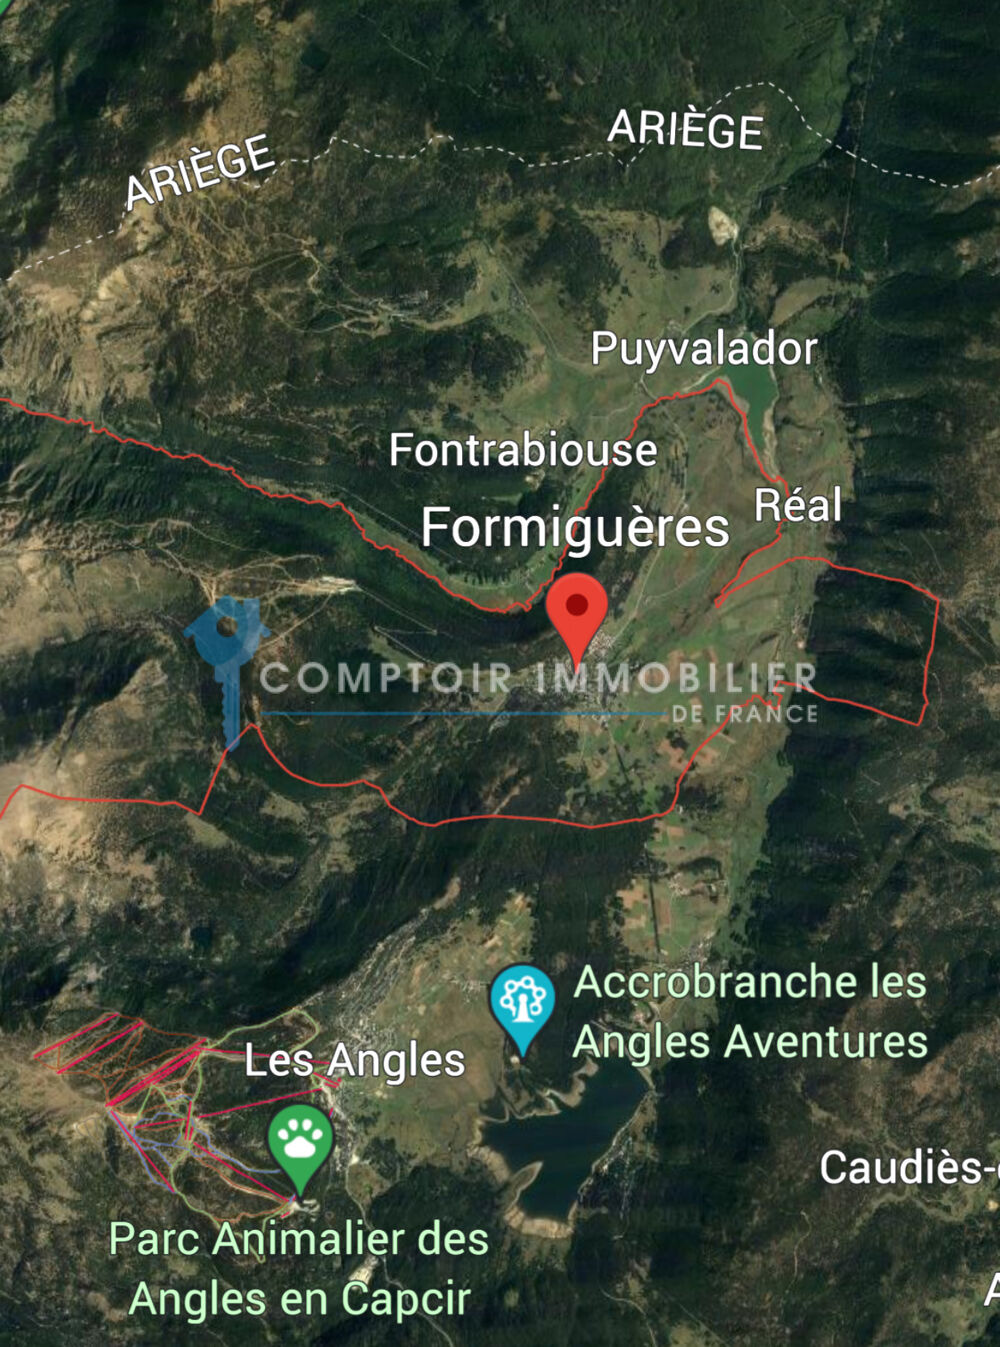 Vente Terrain exclusif terrain viabilis  DE 376 m2 libre de constructeur station de Formigueres Formigueres